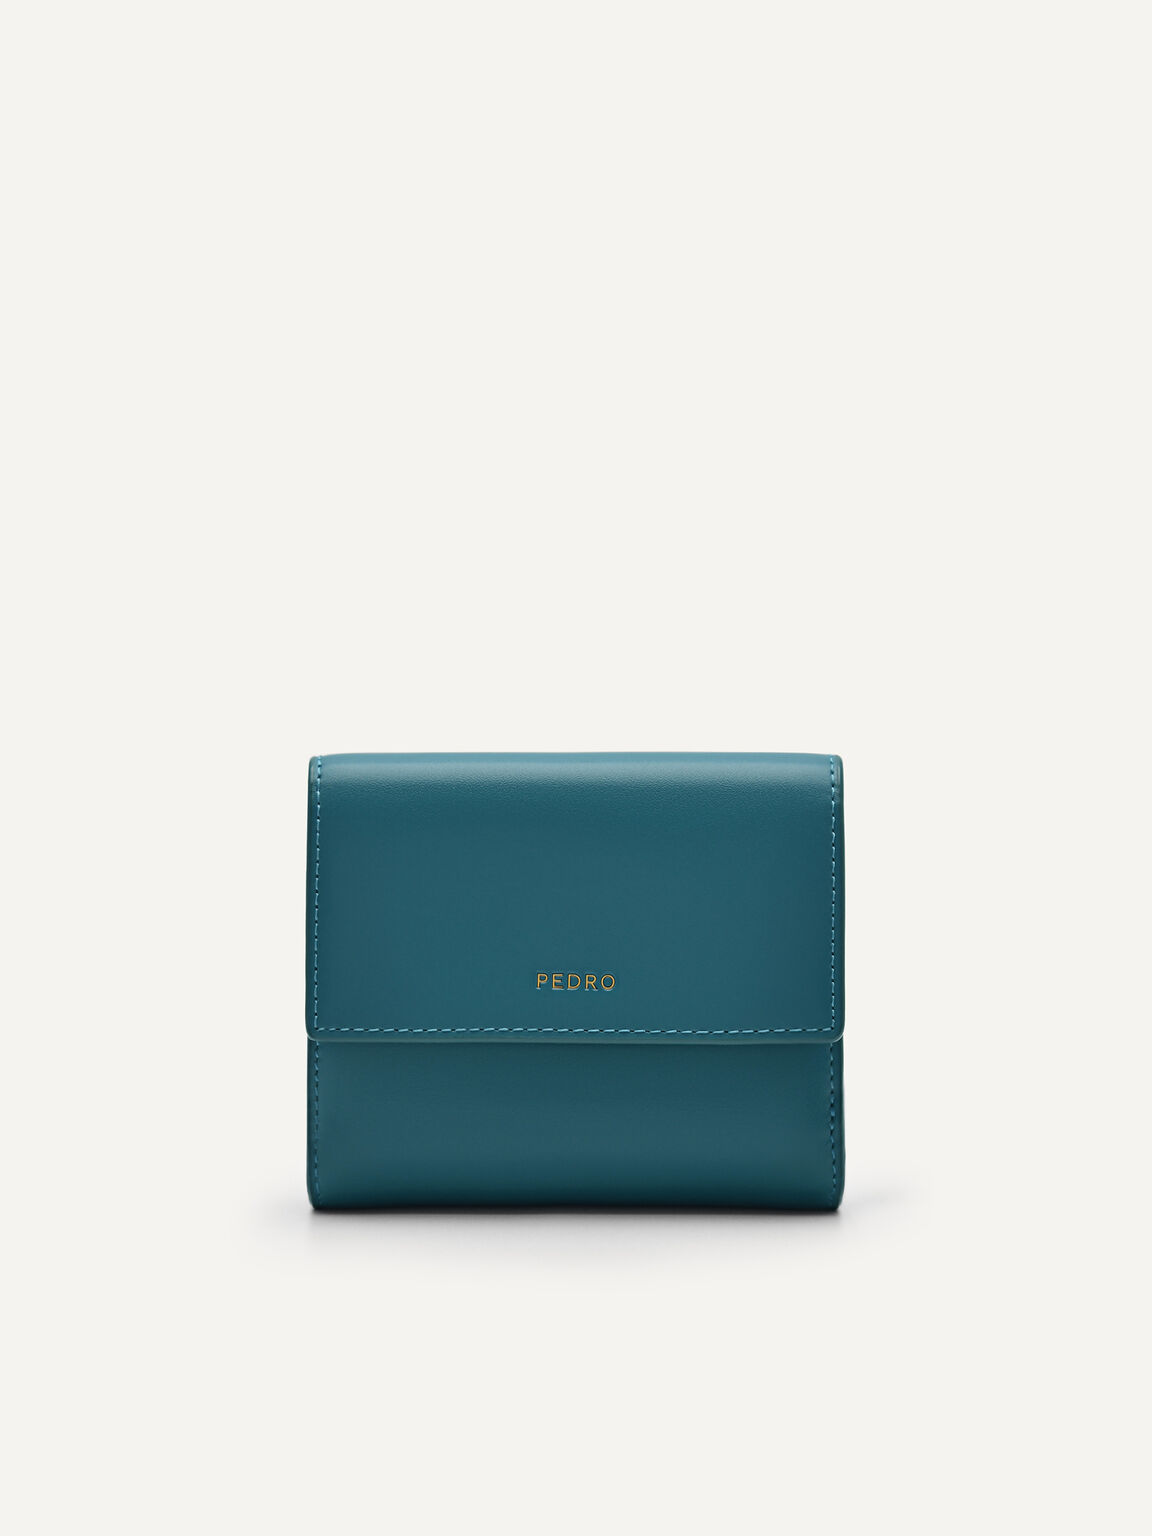 PEDRO Studio Leather Tri-Fold Wallet, Teal